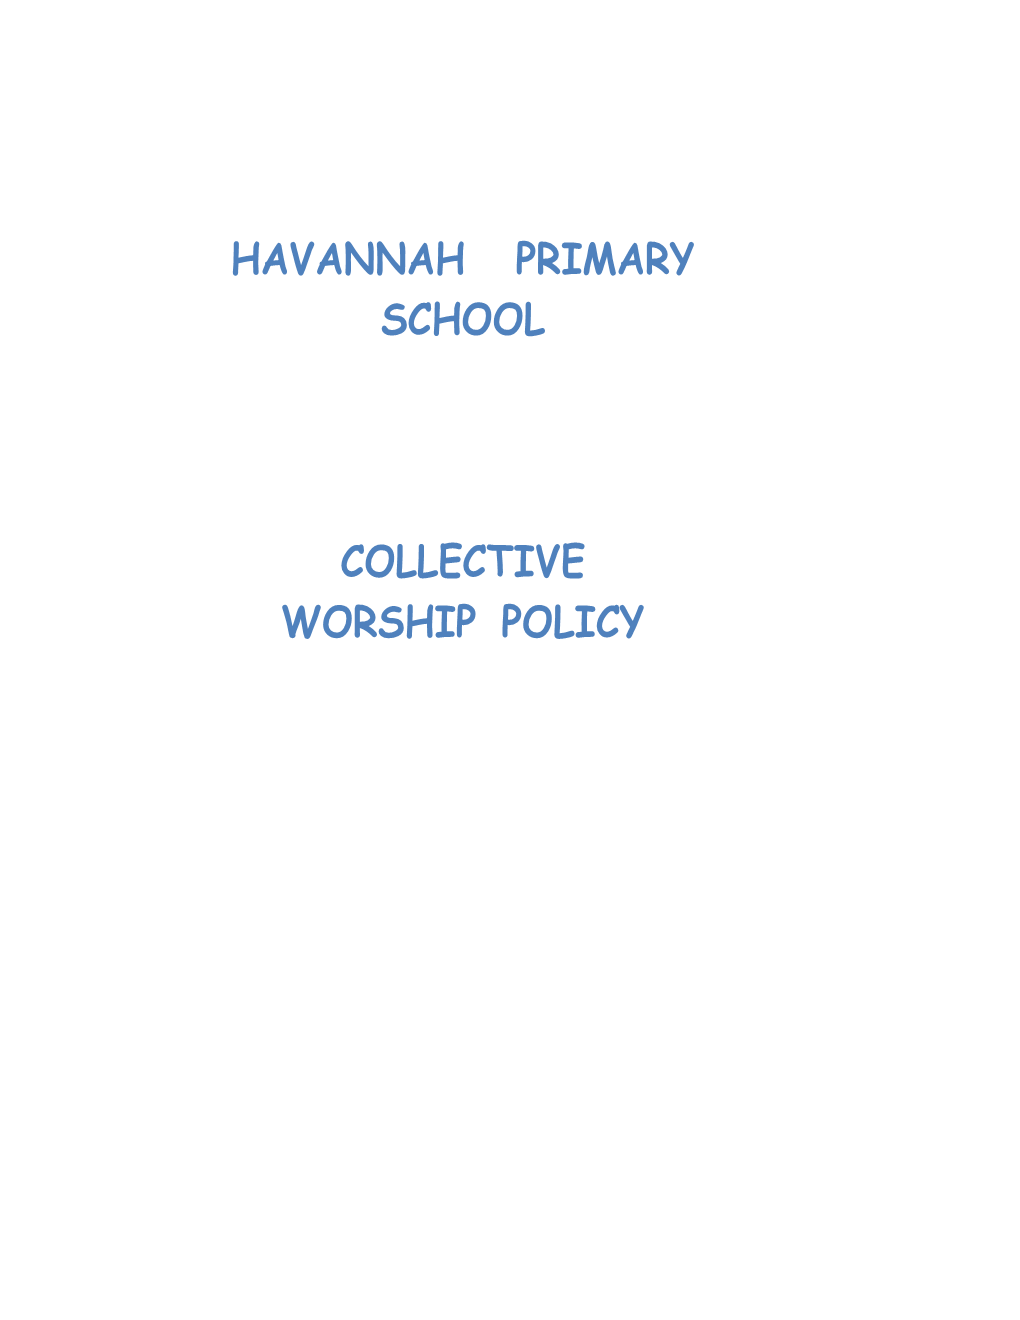 Havannah Primary School